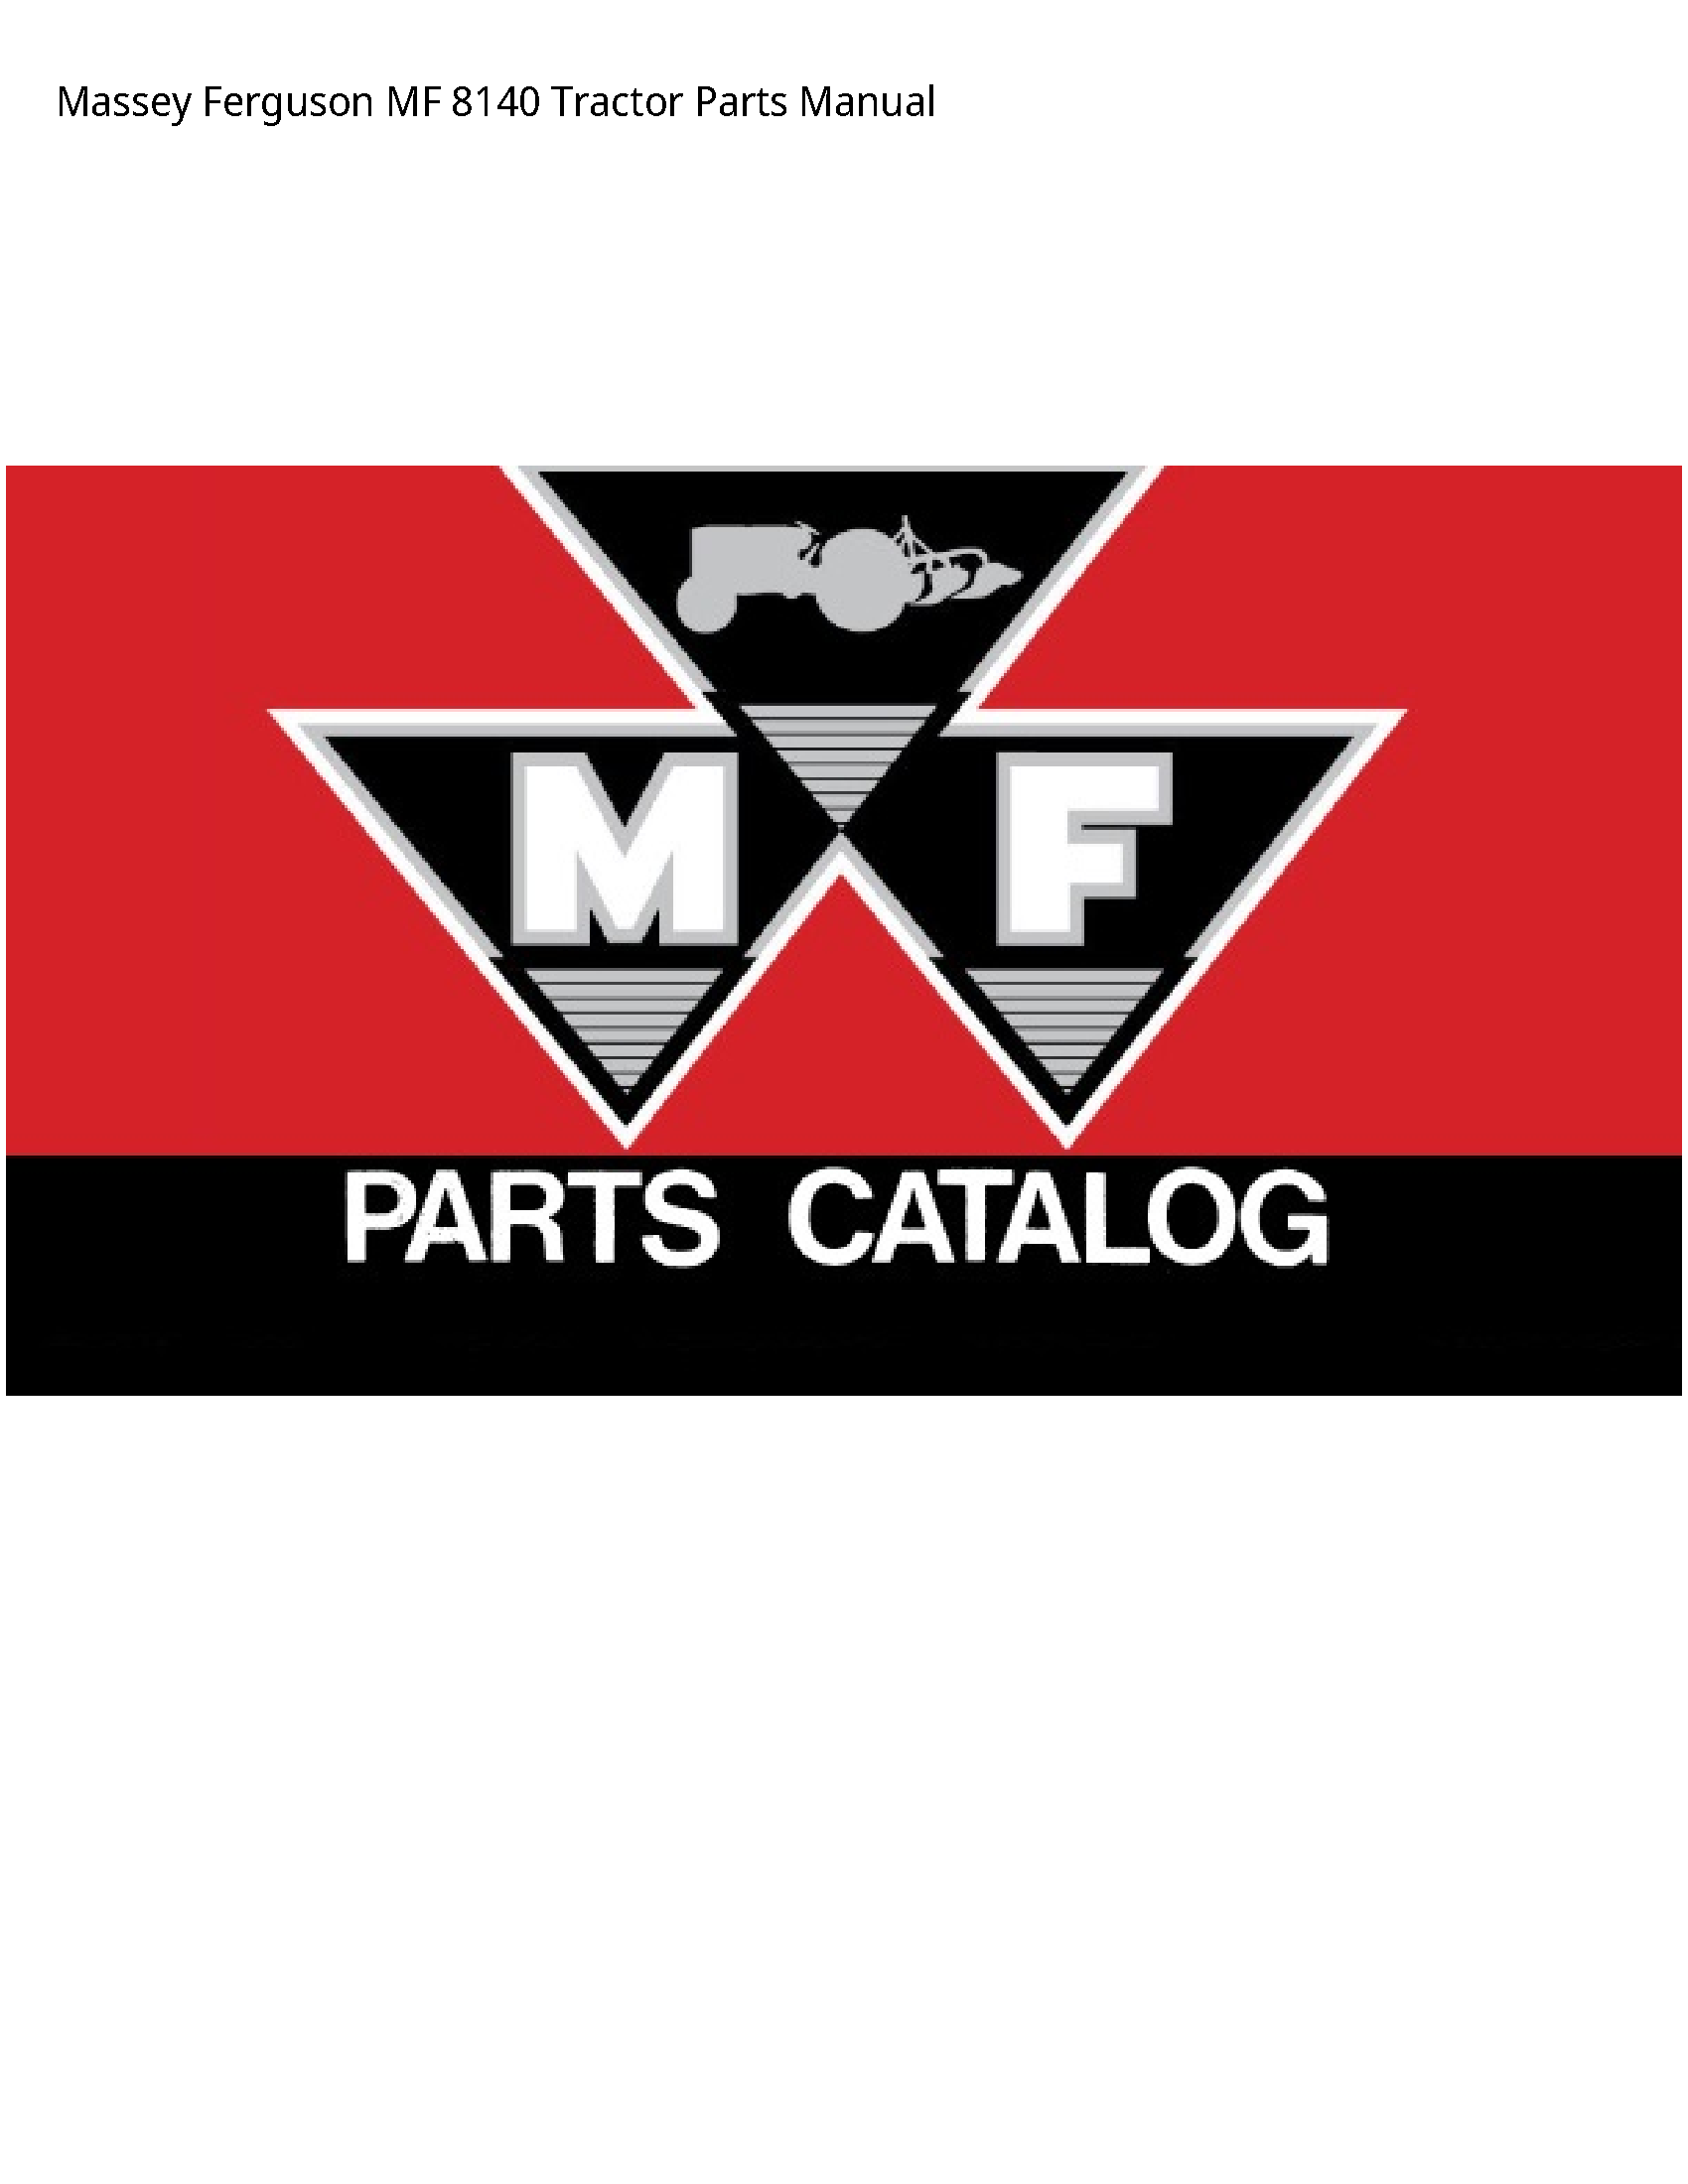 Massey Ferguson 8140 MF Tractor Parts manual